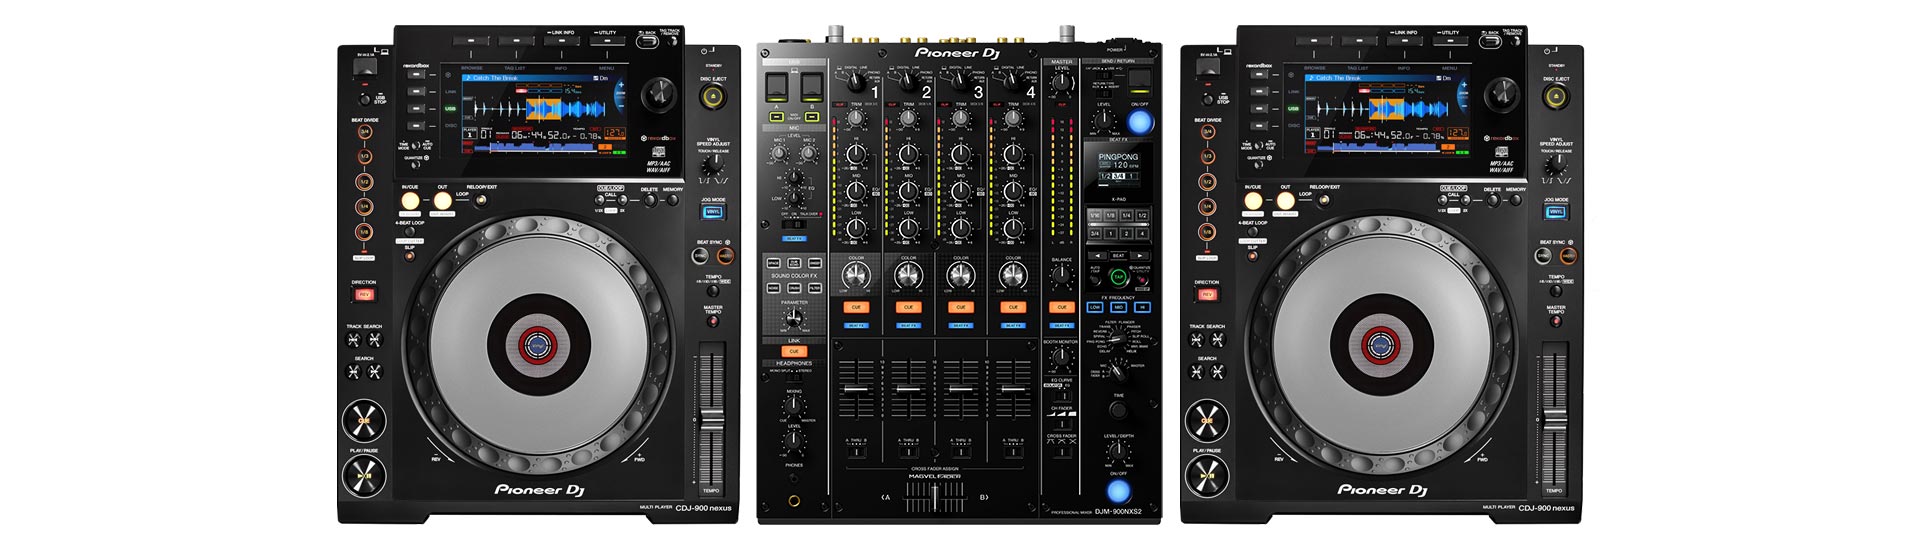 DJ Controller to Club Equipment